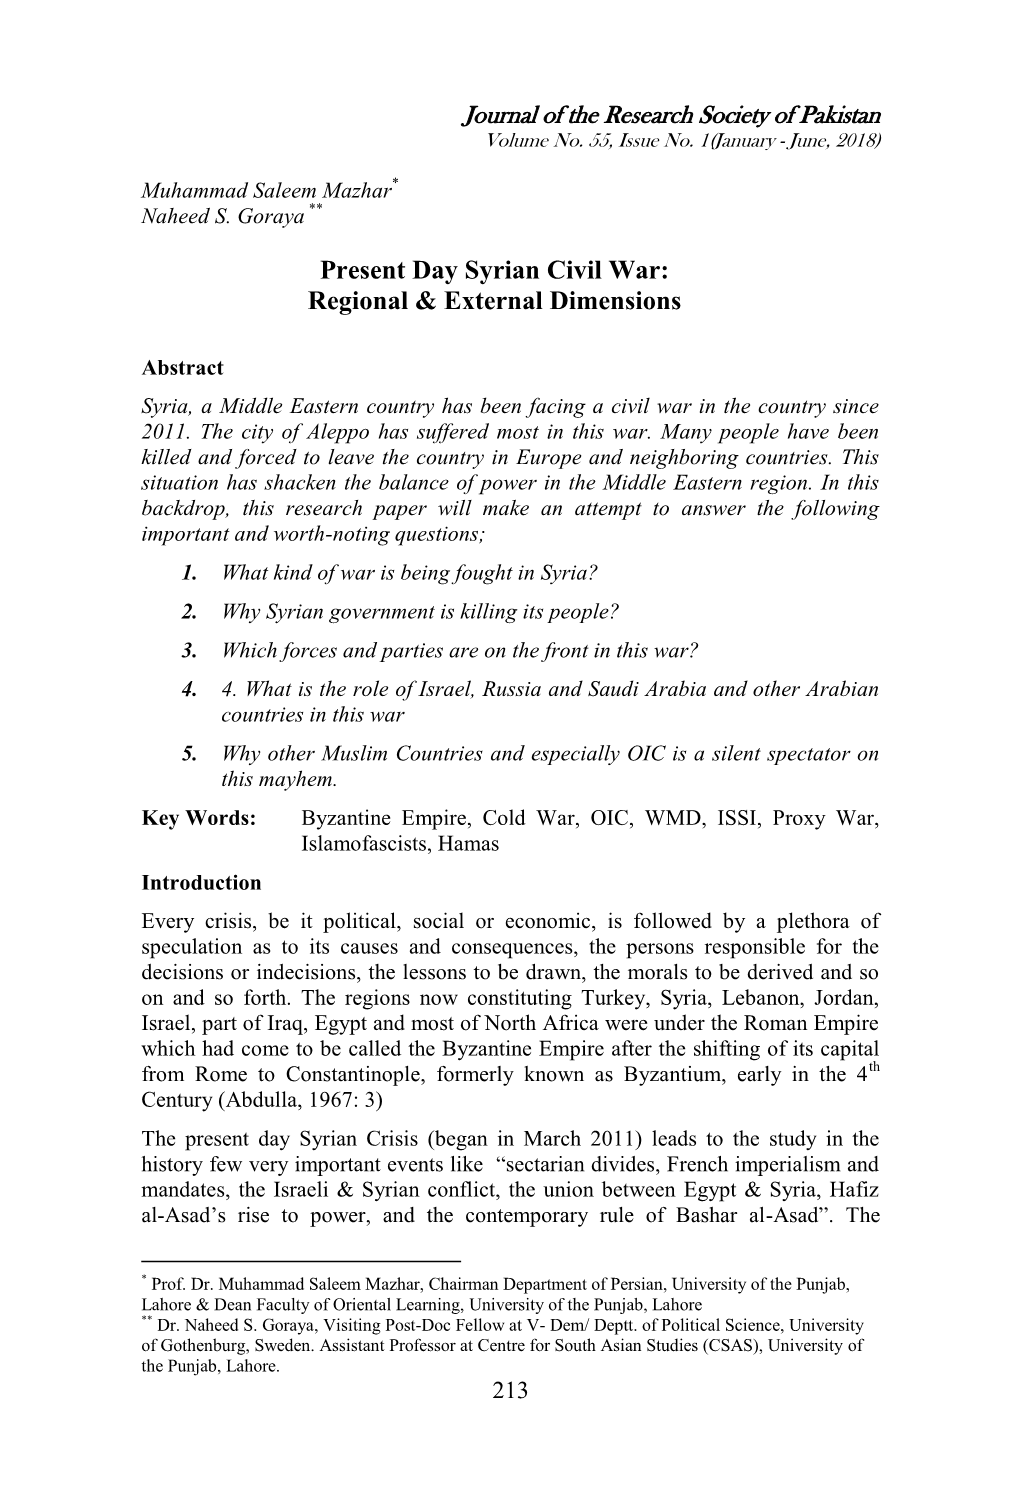 Present Day Syrian Civil War: Regional & External Dimensions